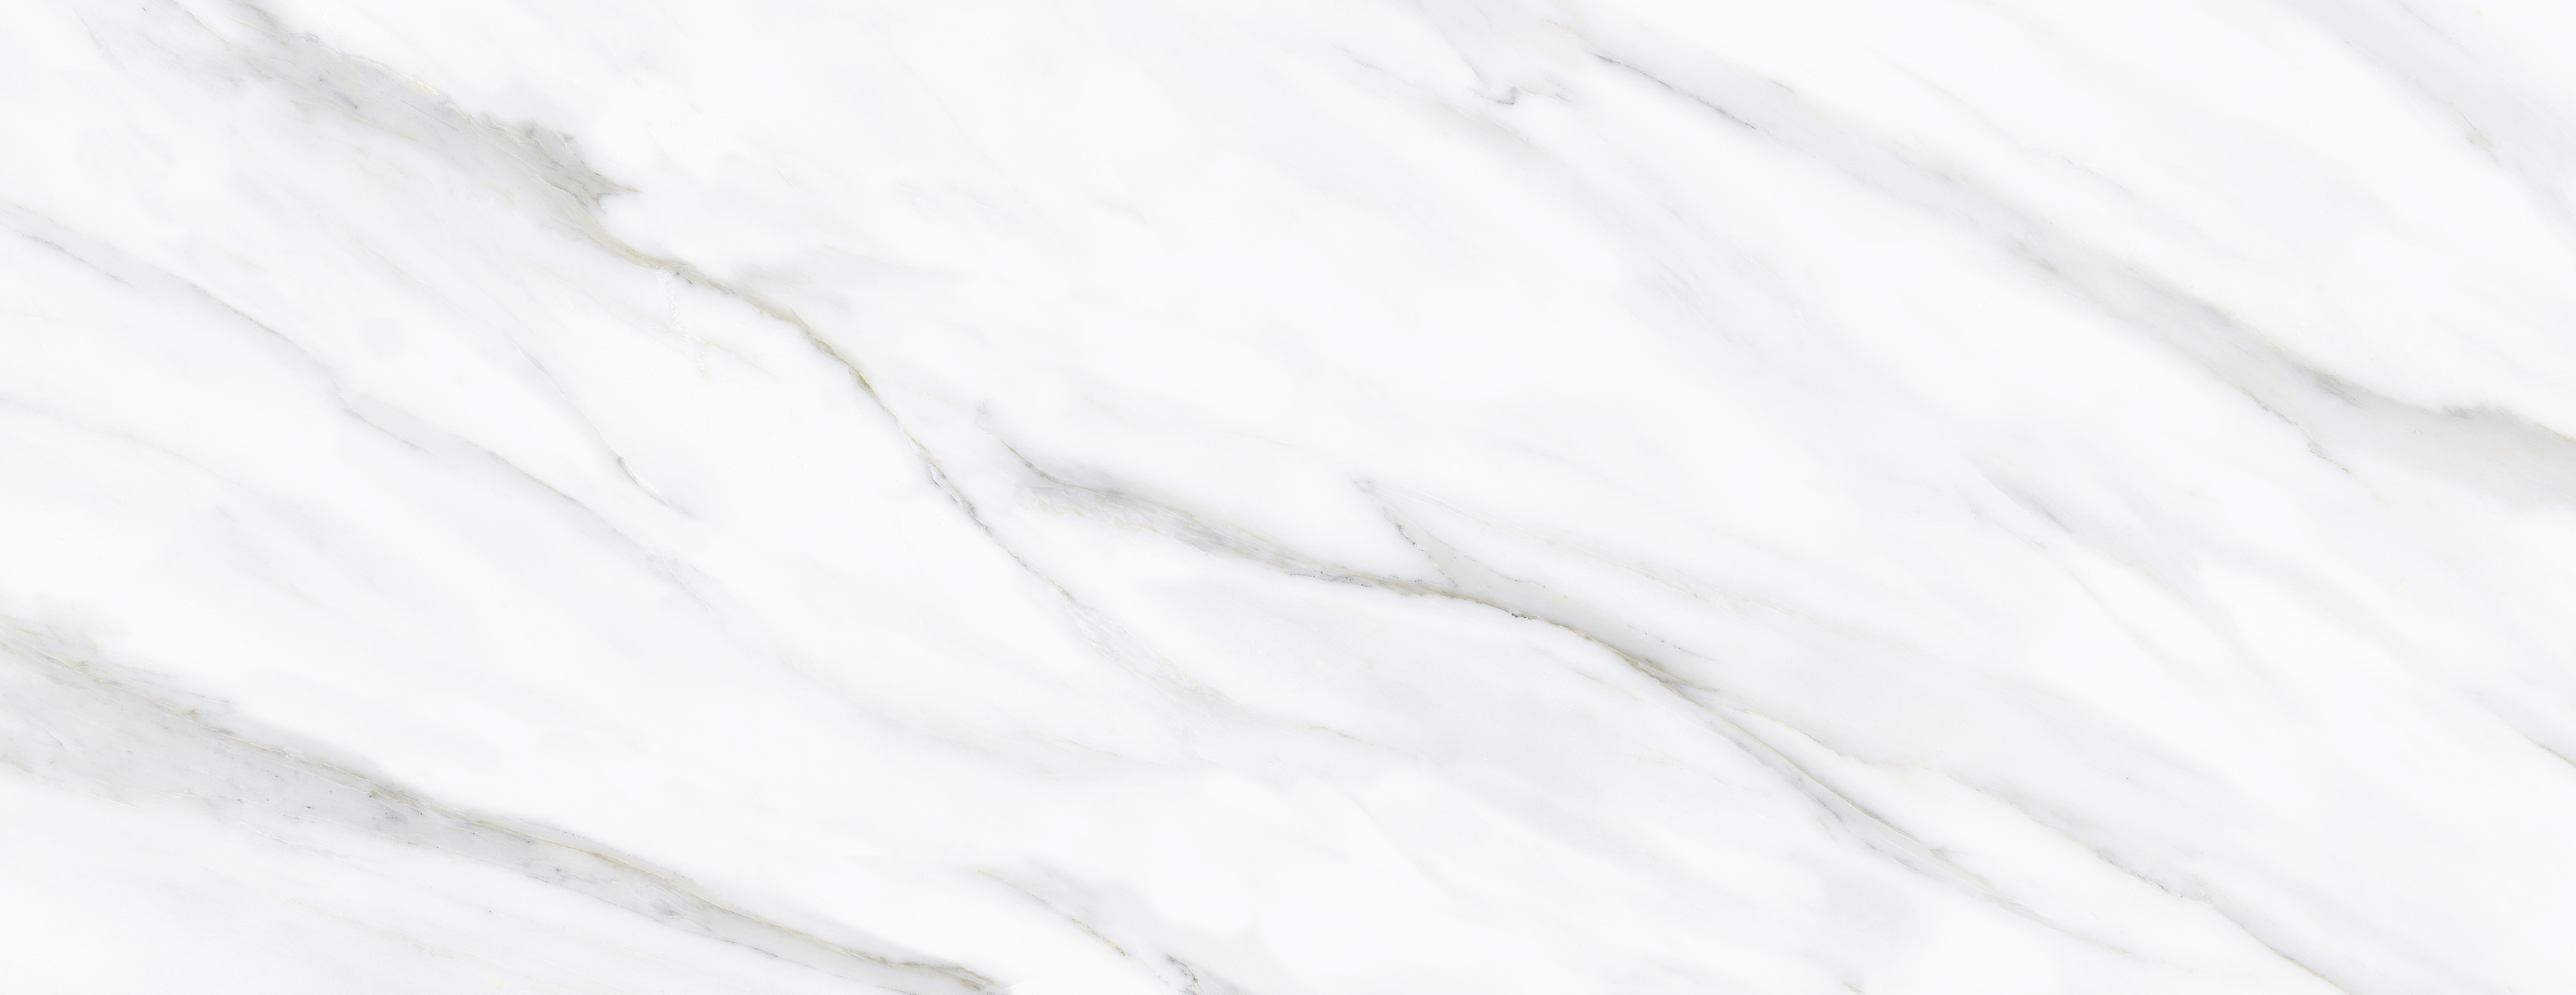 Carrara White premium marble texture white calacatta stone background